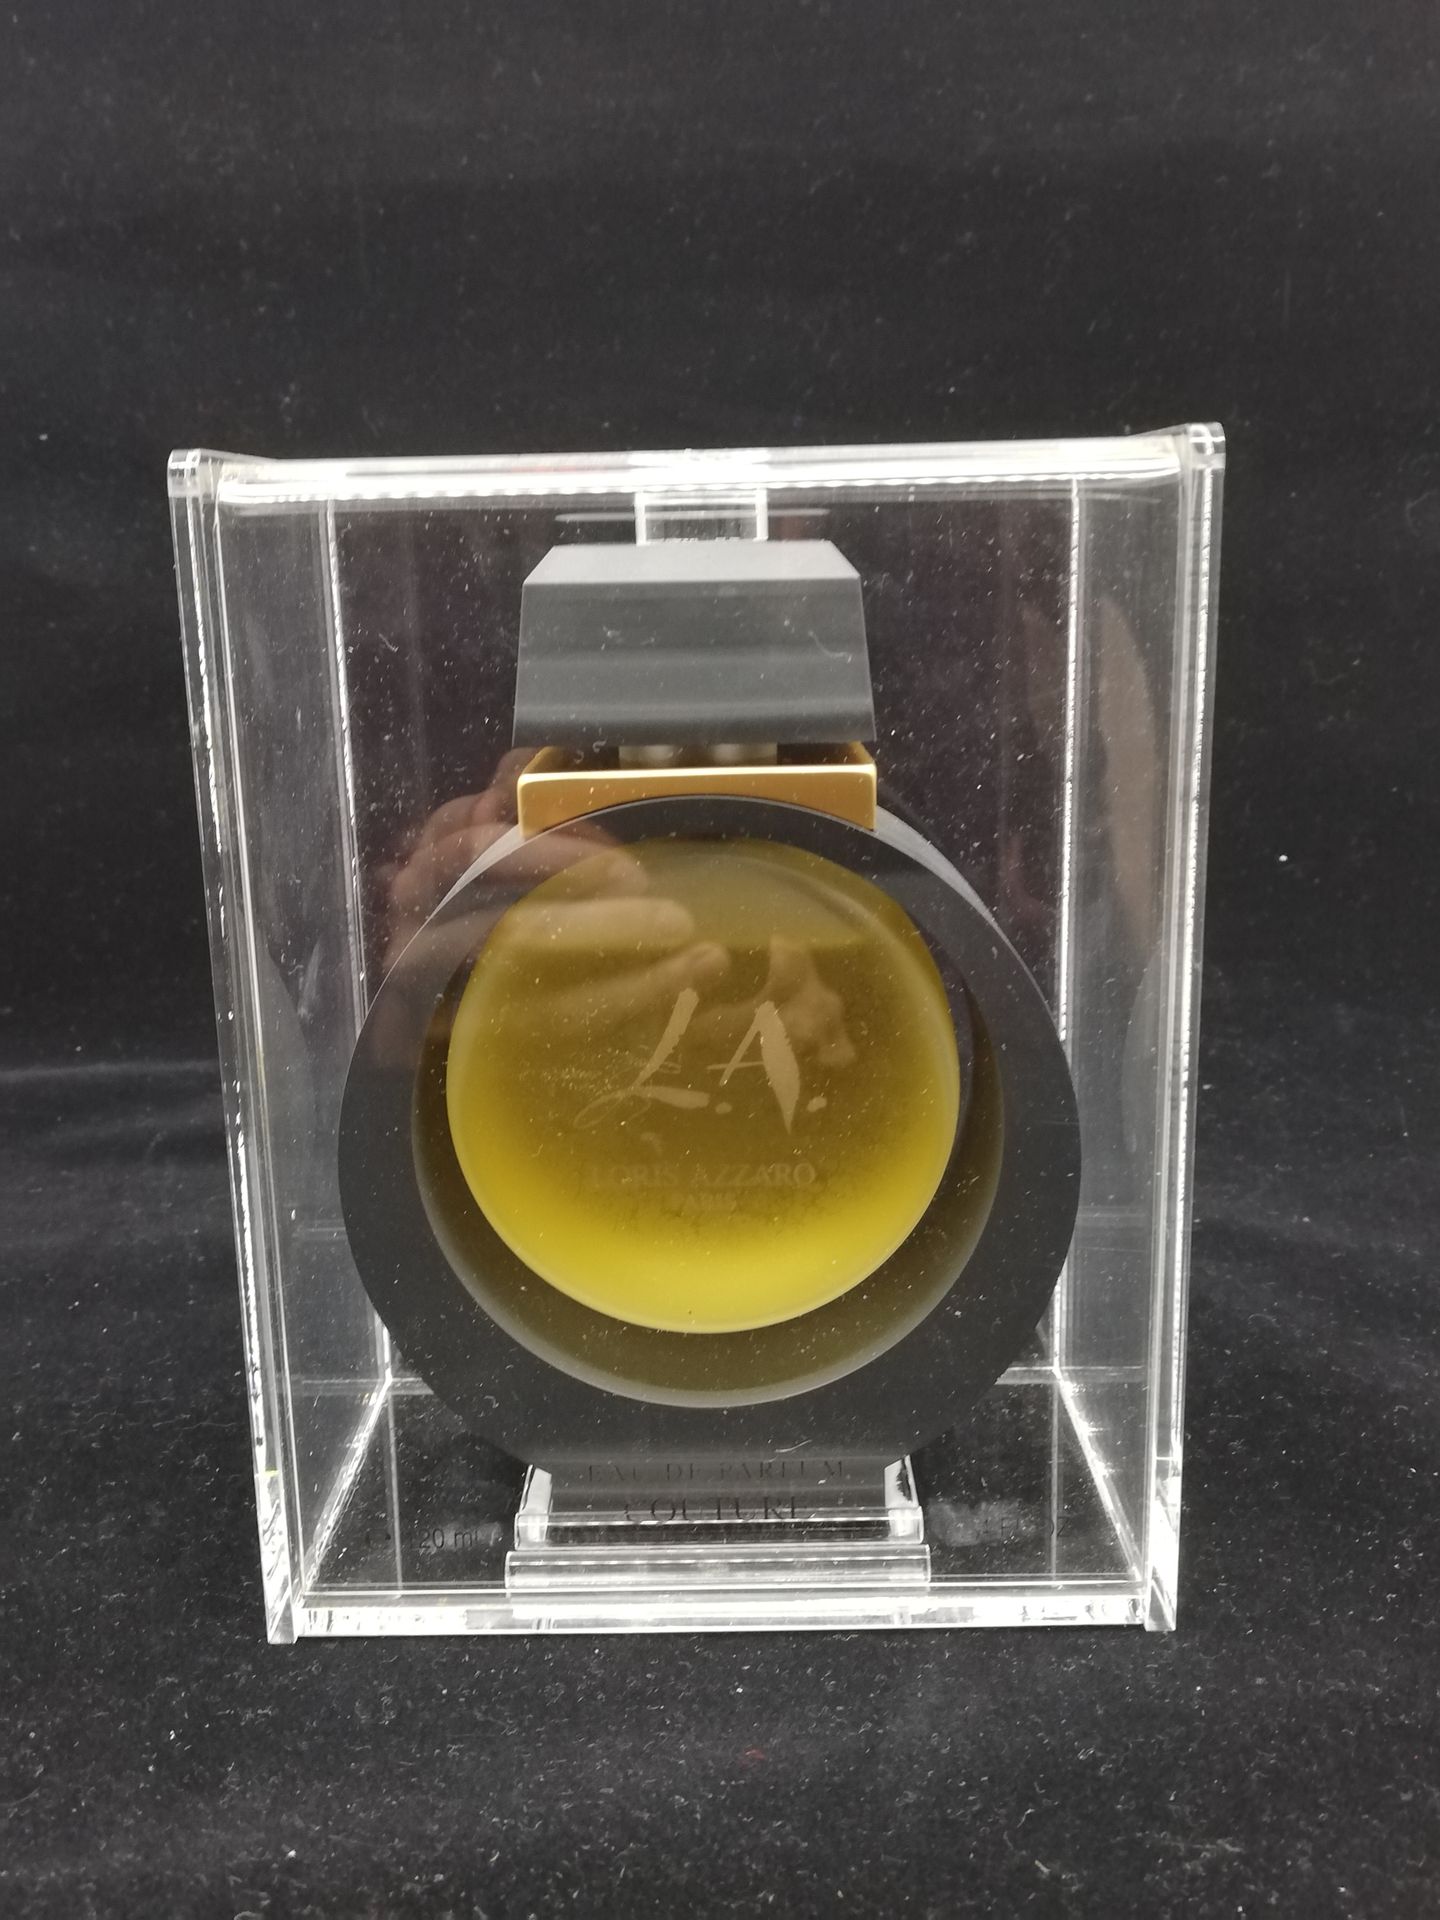 Null 洛里斯-阿扎罗 - "L.A" - (1990年代)

这款由Pierre Dinand设计的香水瓶装在其标题为Plexi的盒子里，含有120毫升的淡&hellip;